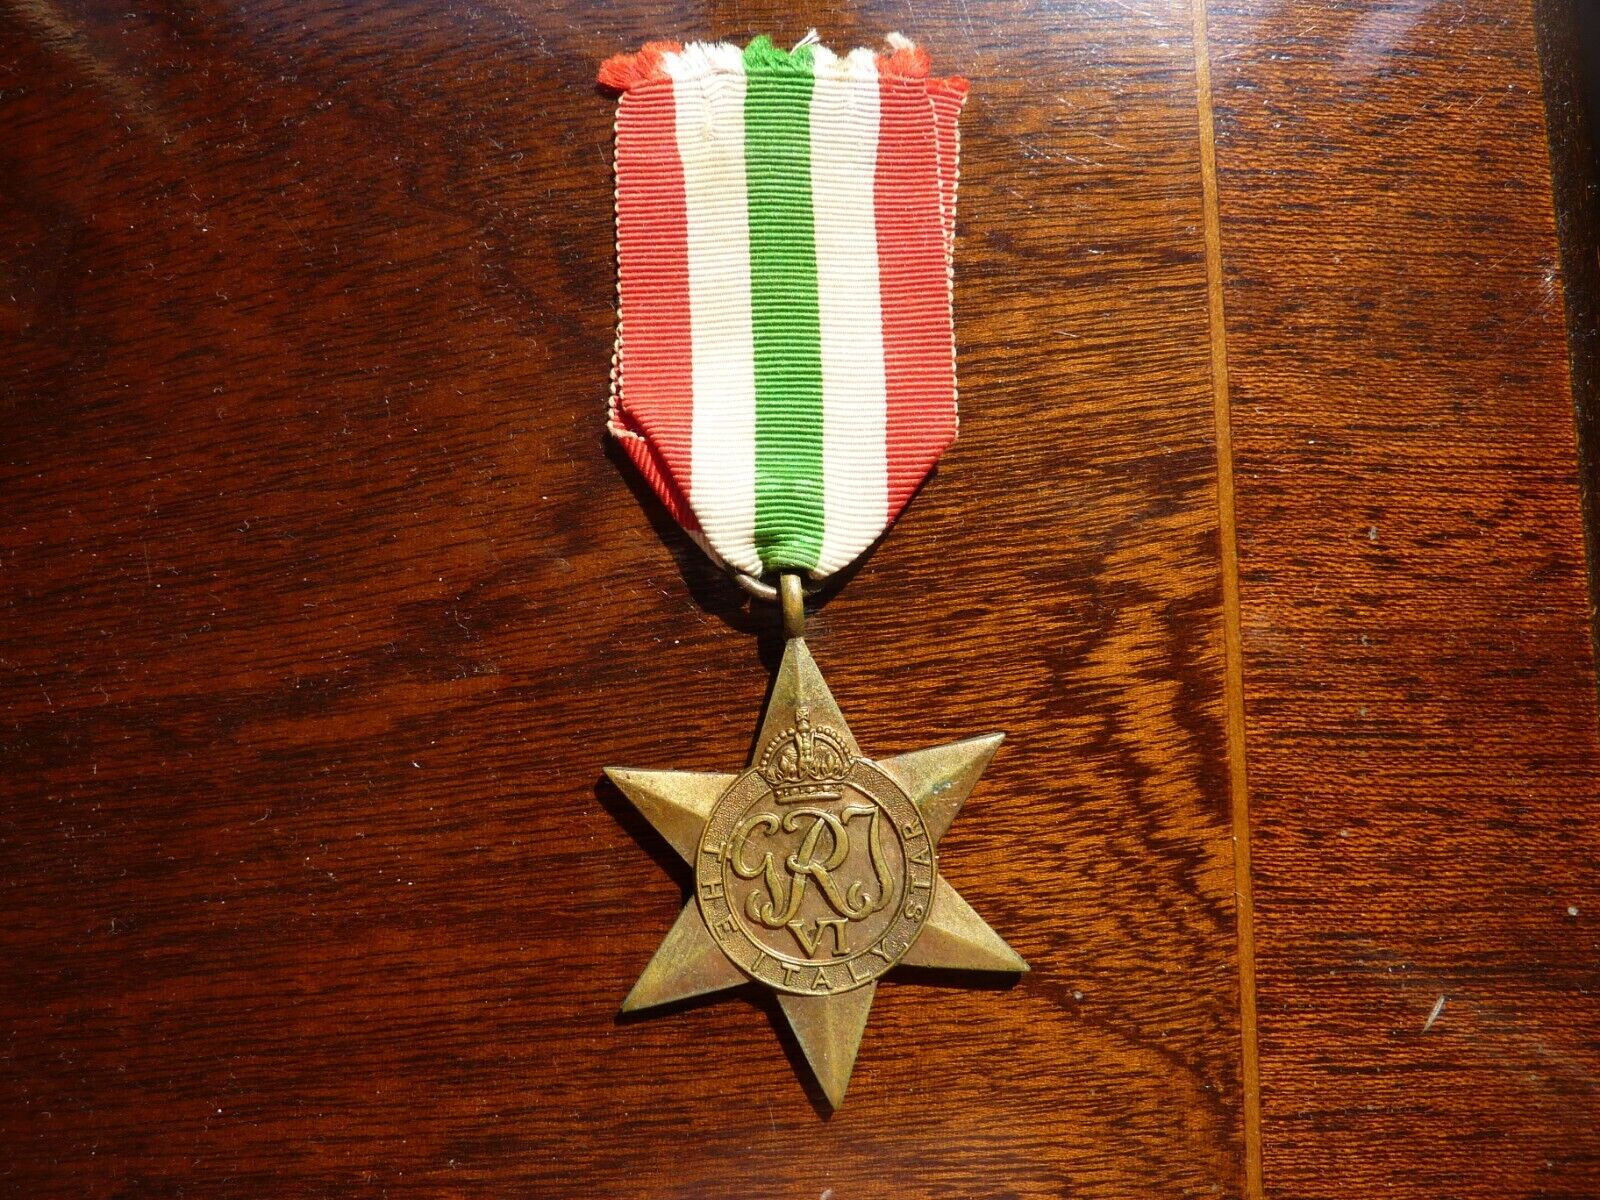 George V1 1939-1945 The Italy Star Medal - Original - Full size